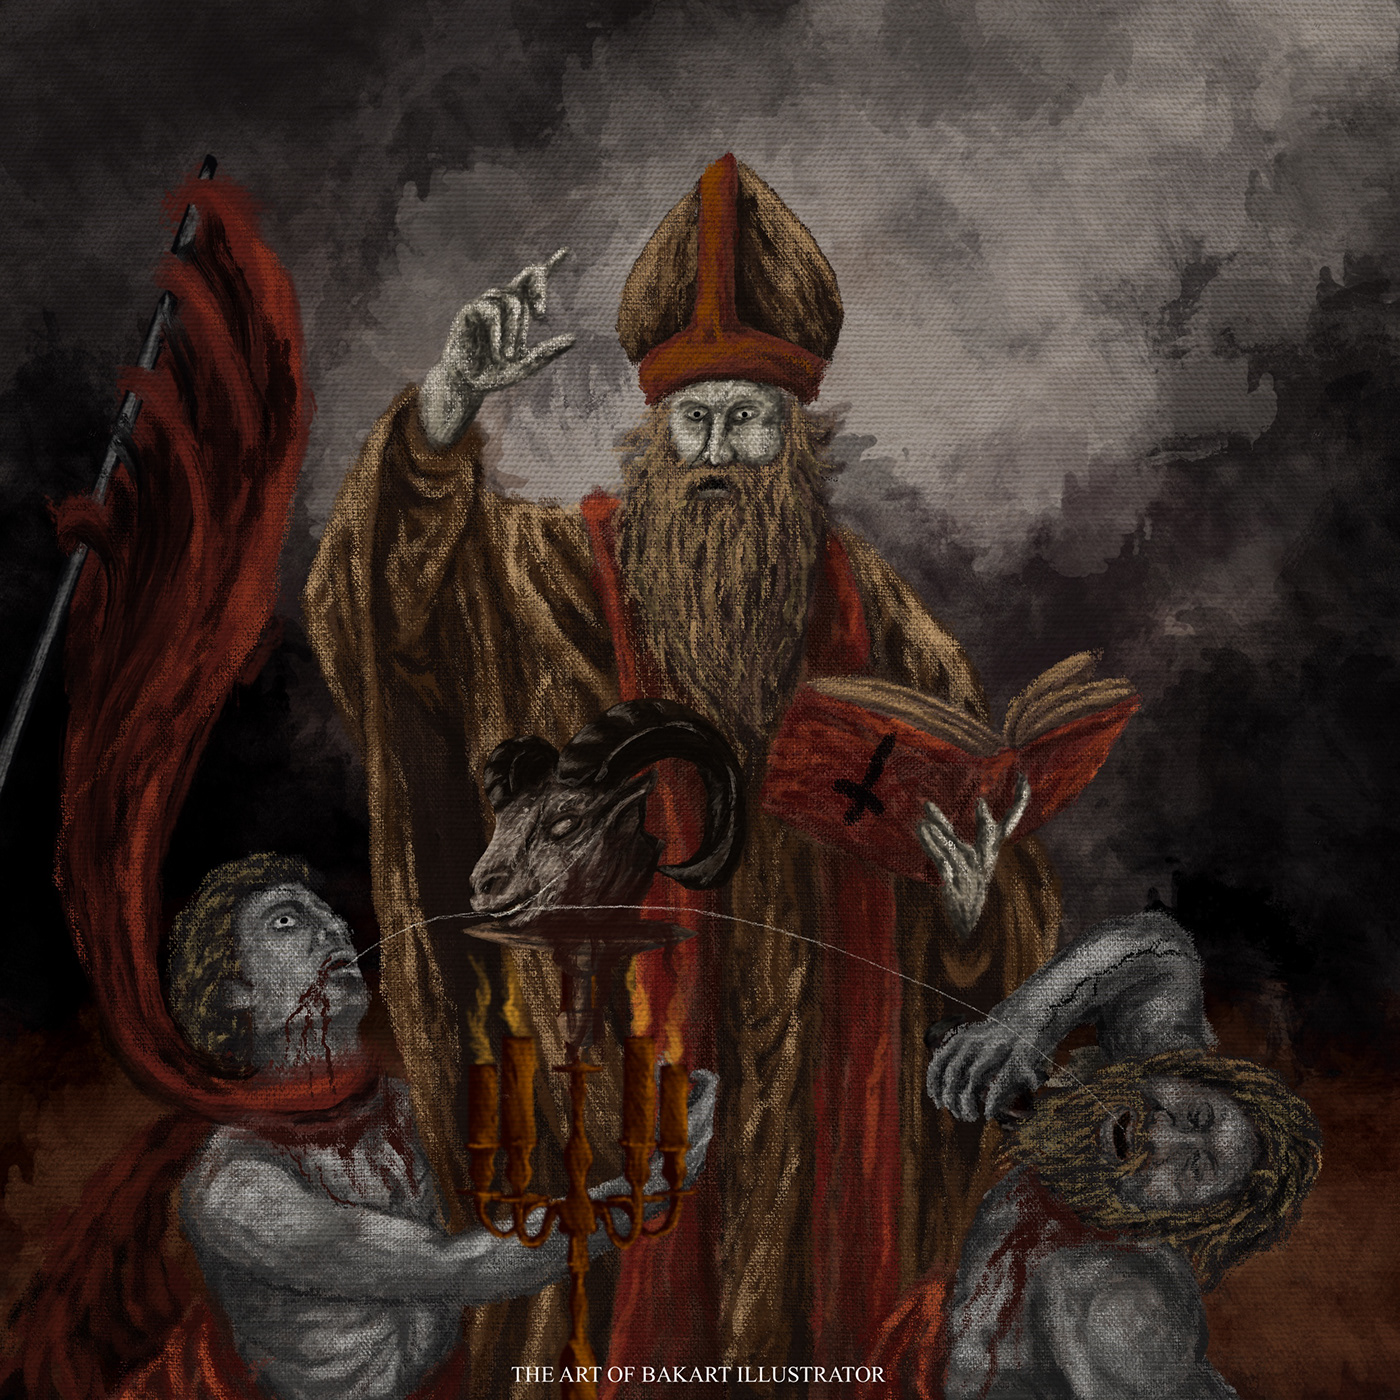 dark horror Cover Art album cover death metal black metal deathcore heavy metal poster Dogmatic